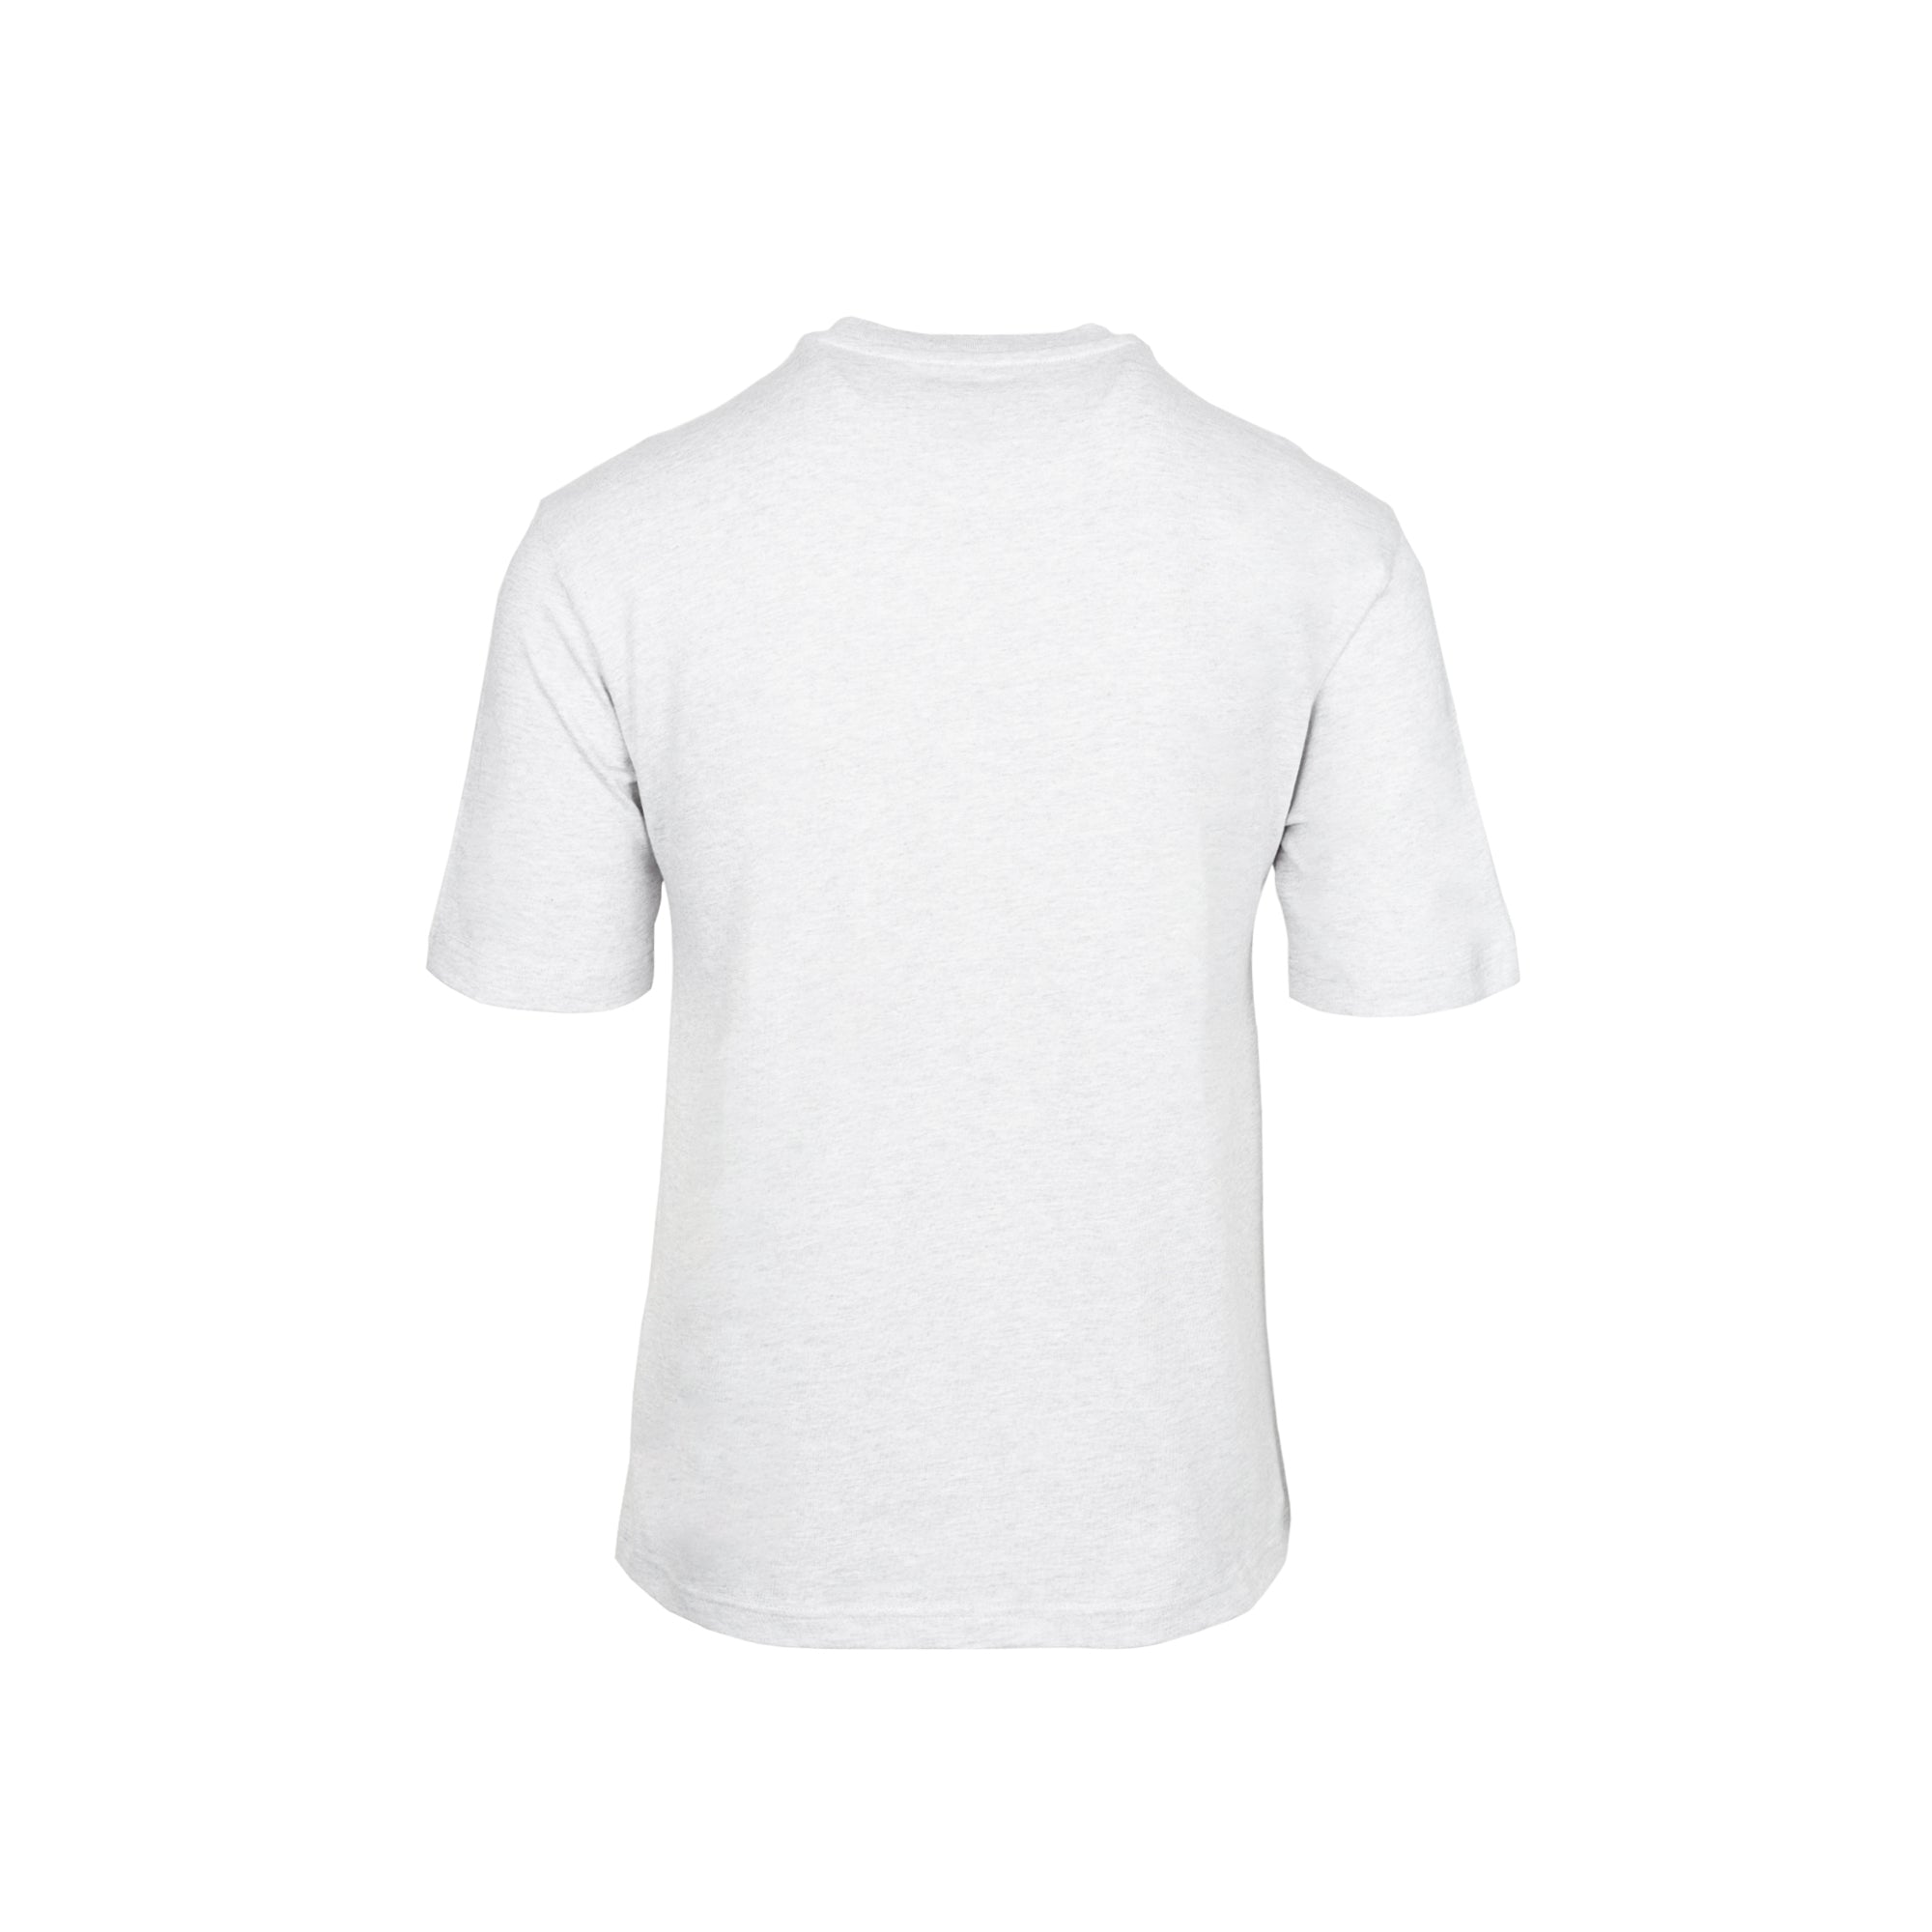 Buy Palace Garfield Pocket Grey Marl T-Shirt Online